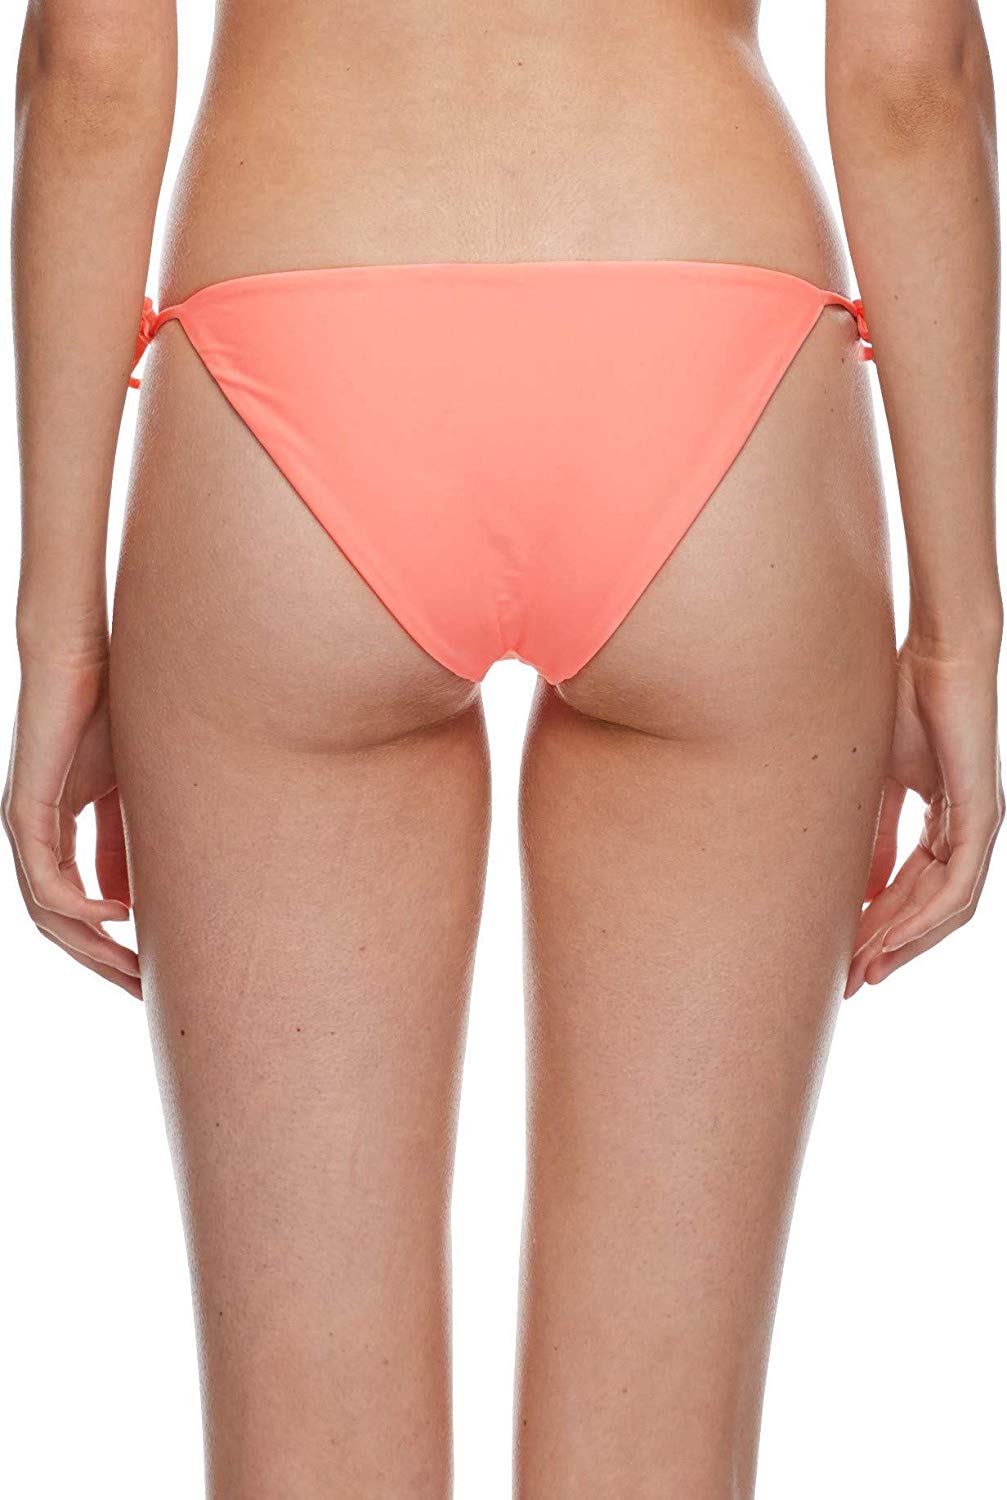 Body Glove Women's Smoothies Iris Solid Tie Side Bikini Bottom Swimsuit - image 2 of 4